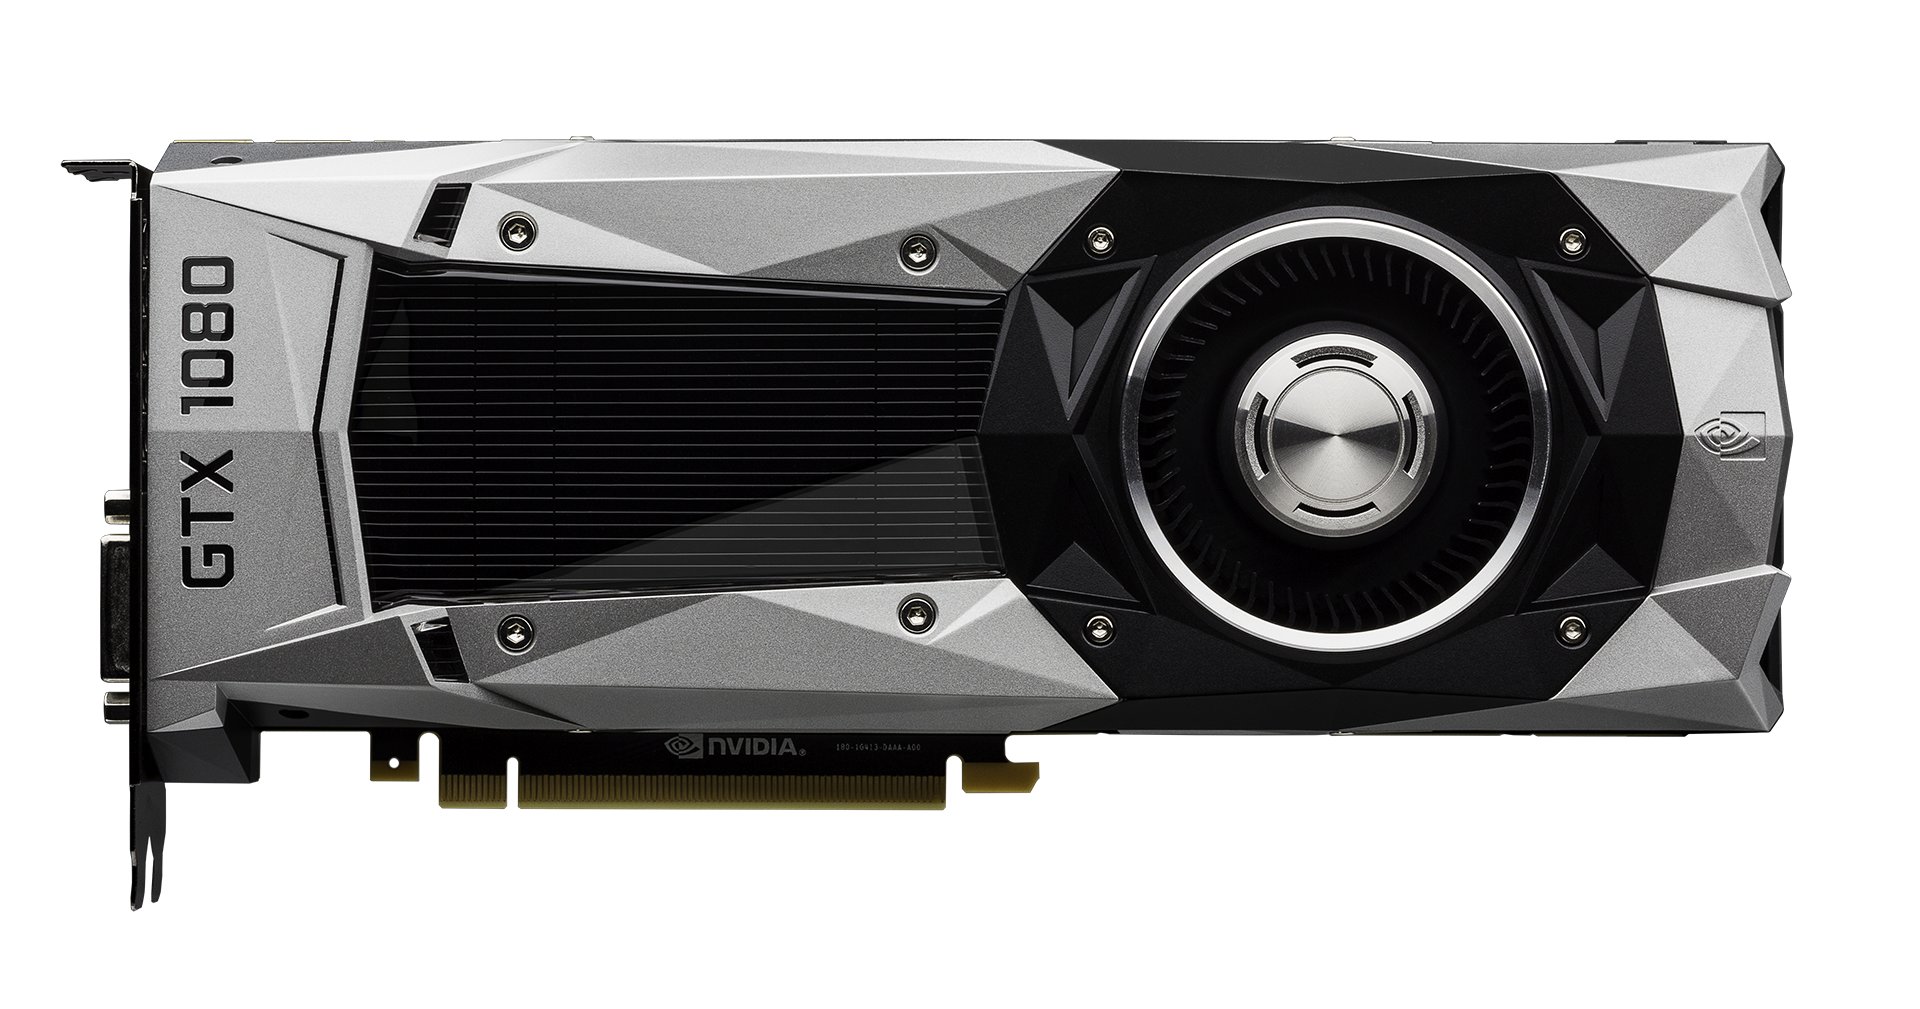 Nvidia GeForce GTX 1080 in Bildern